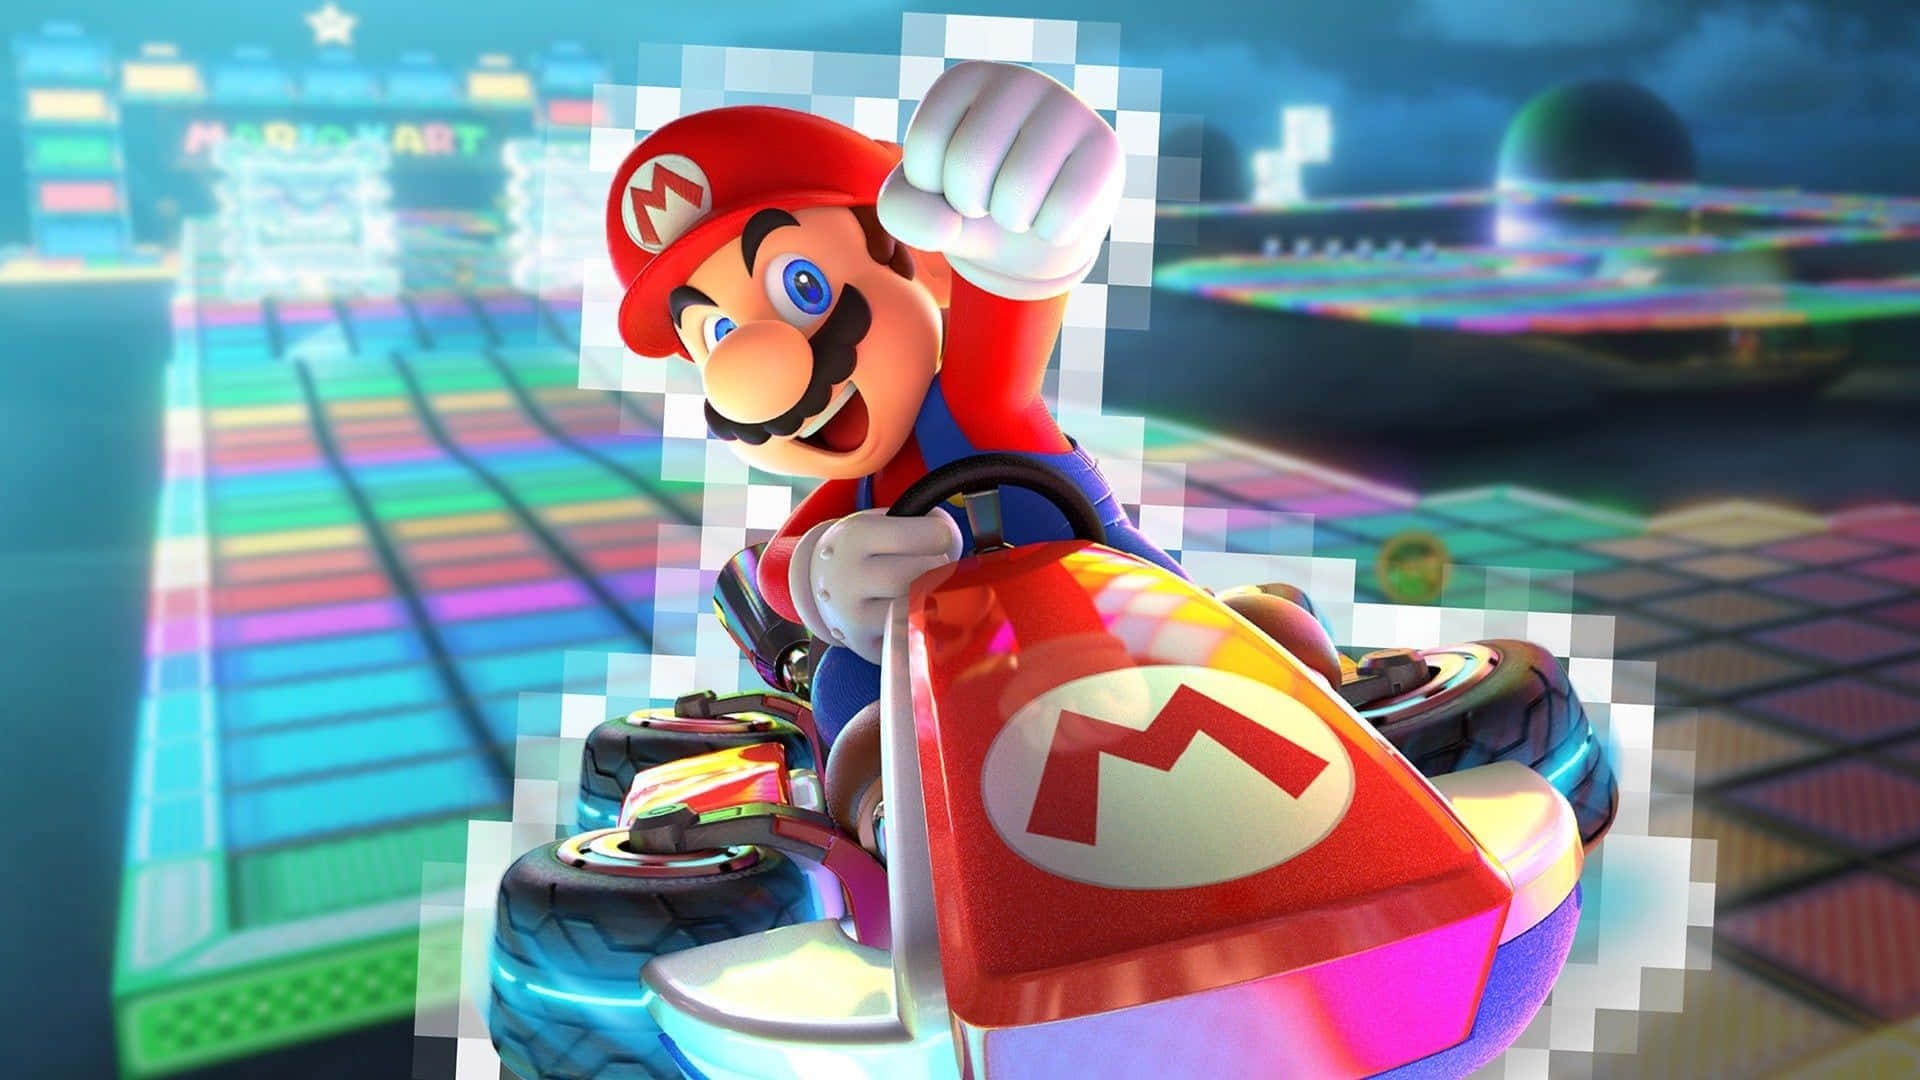 "Race in the Mushroom Kingdom with Mario Kart!"